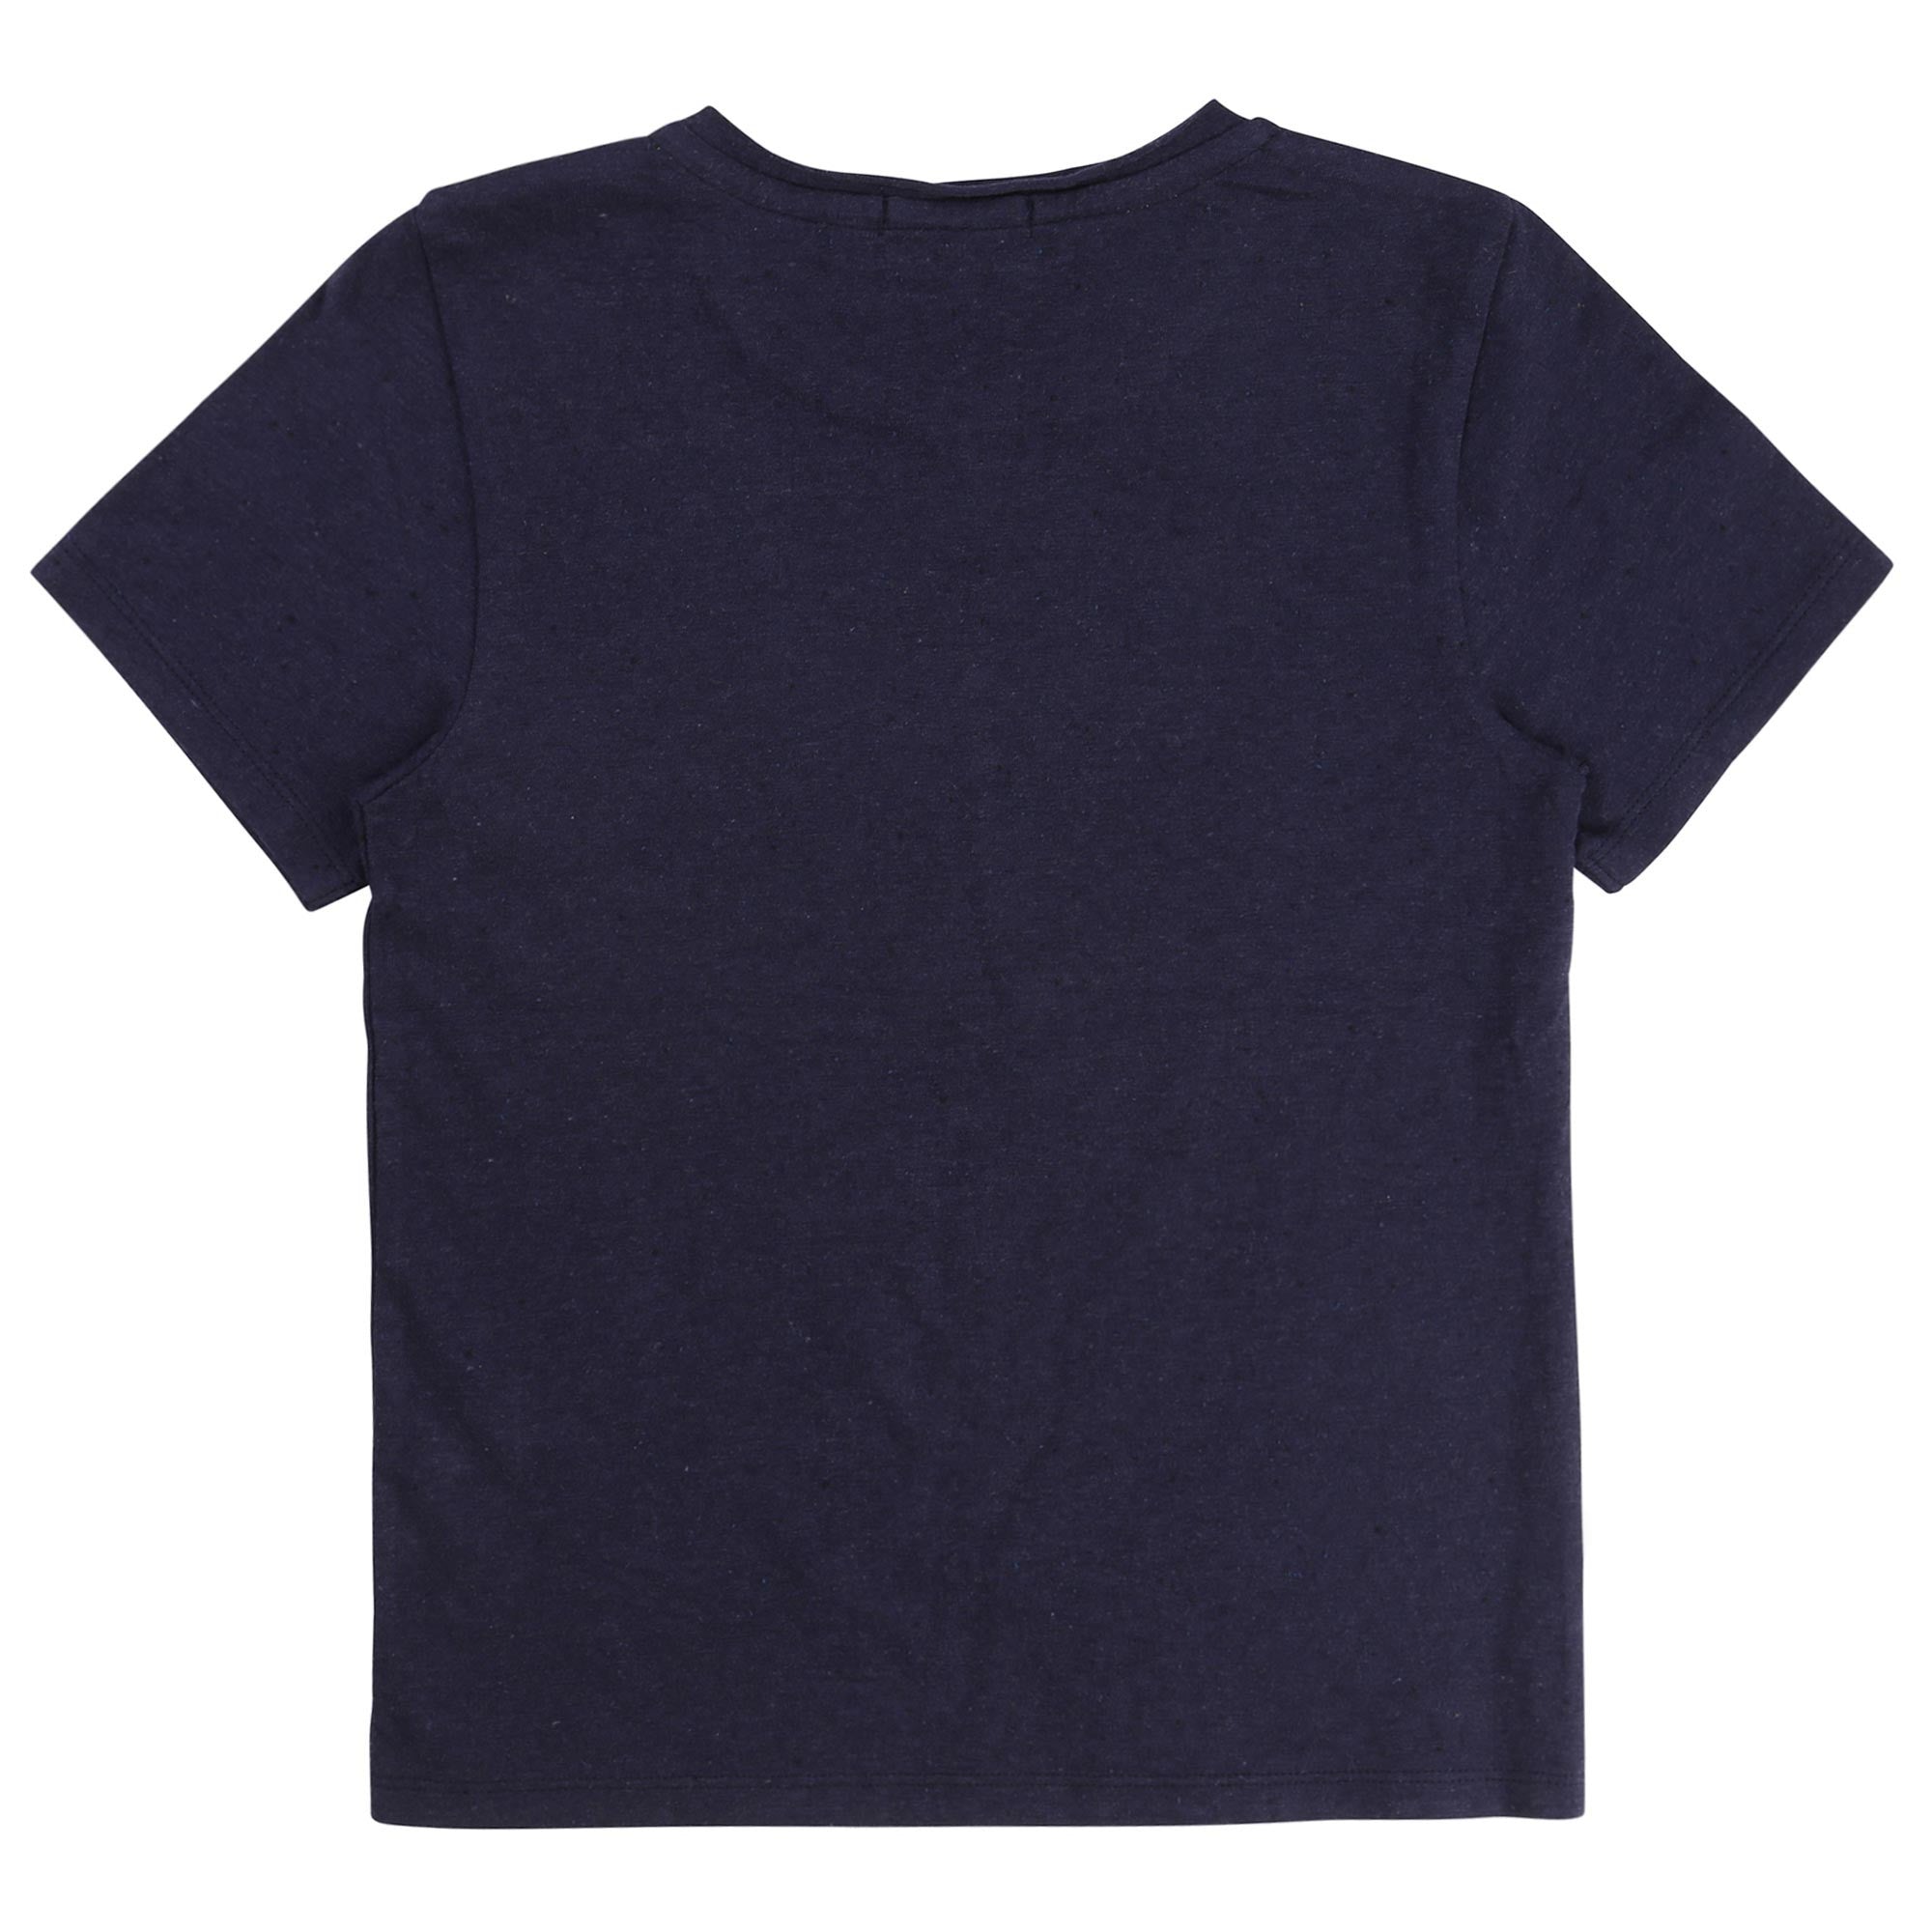 Boys Navy Blue Cotton T-shirt